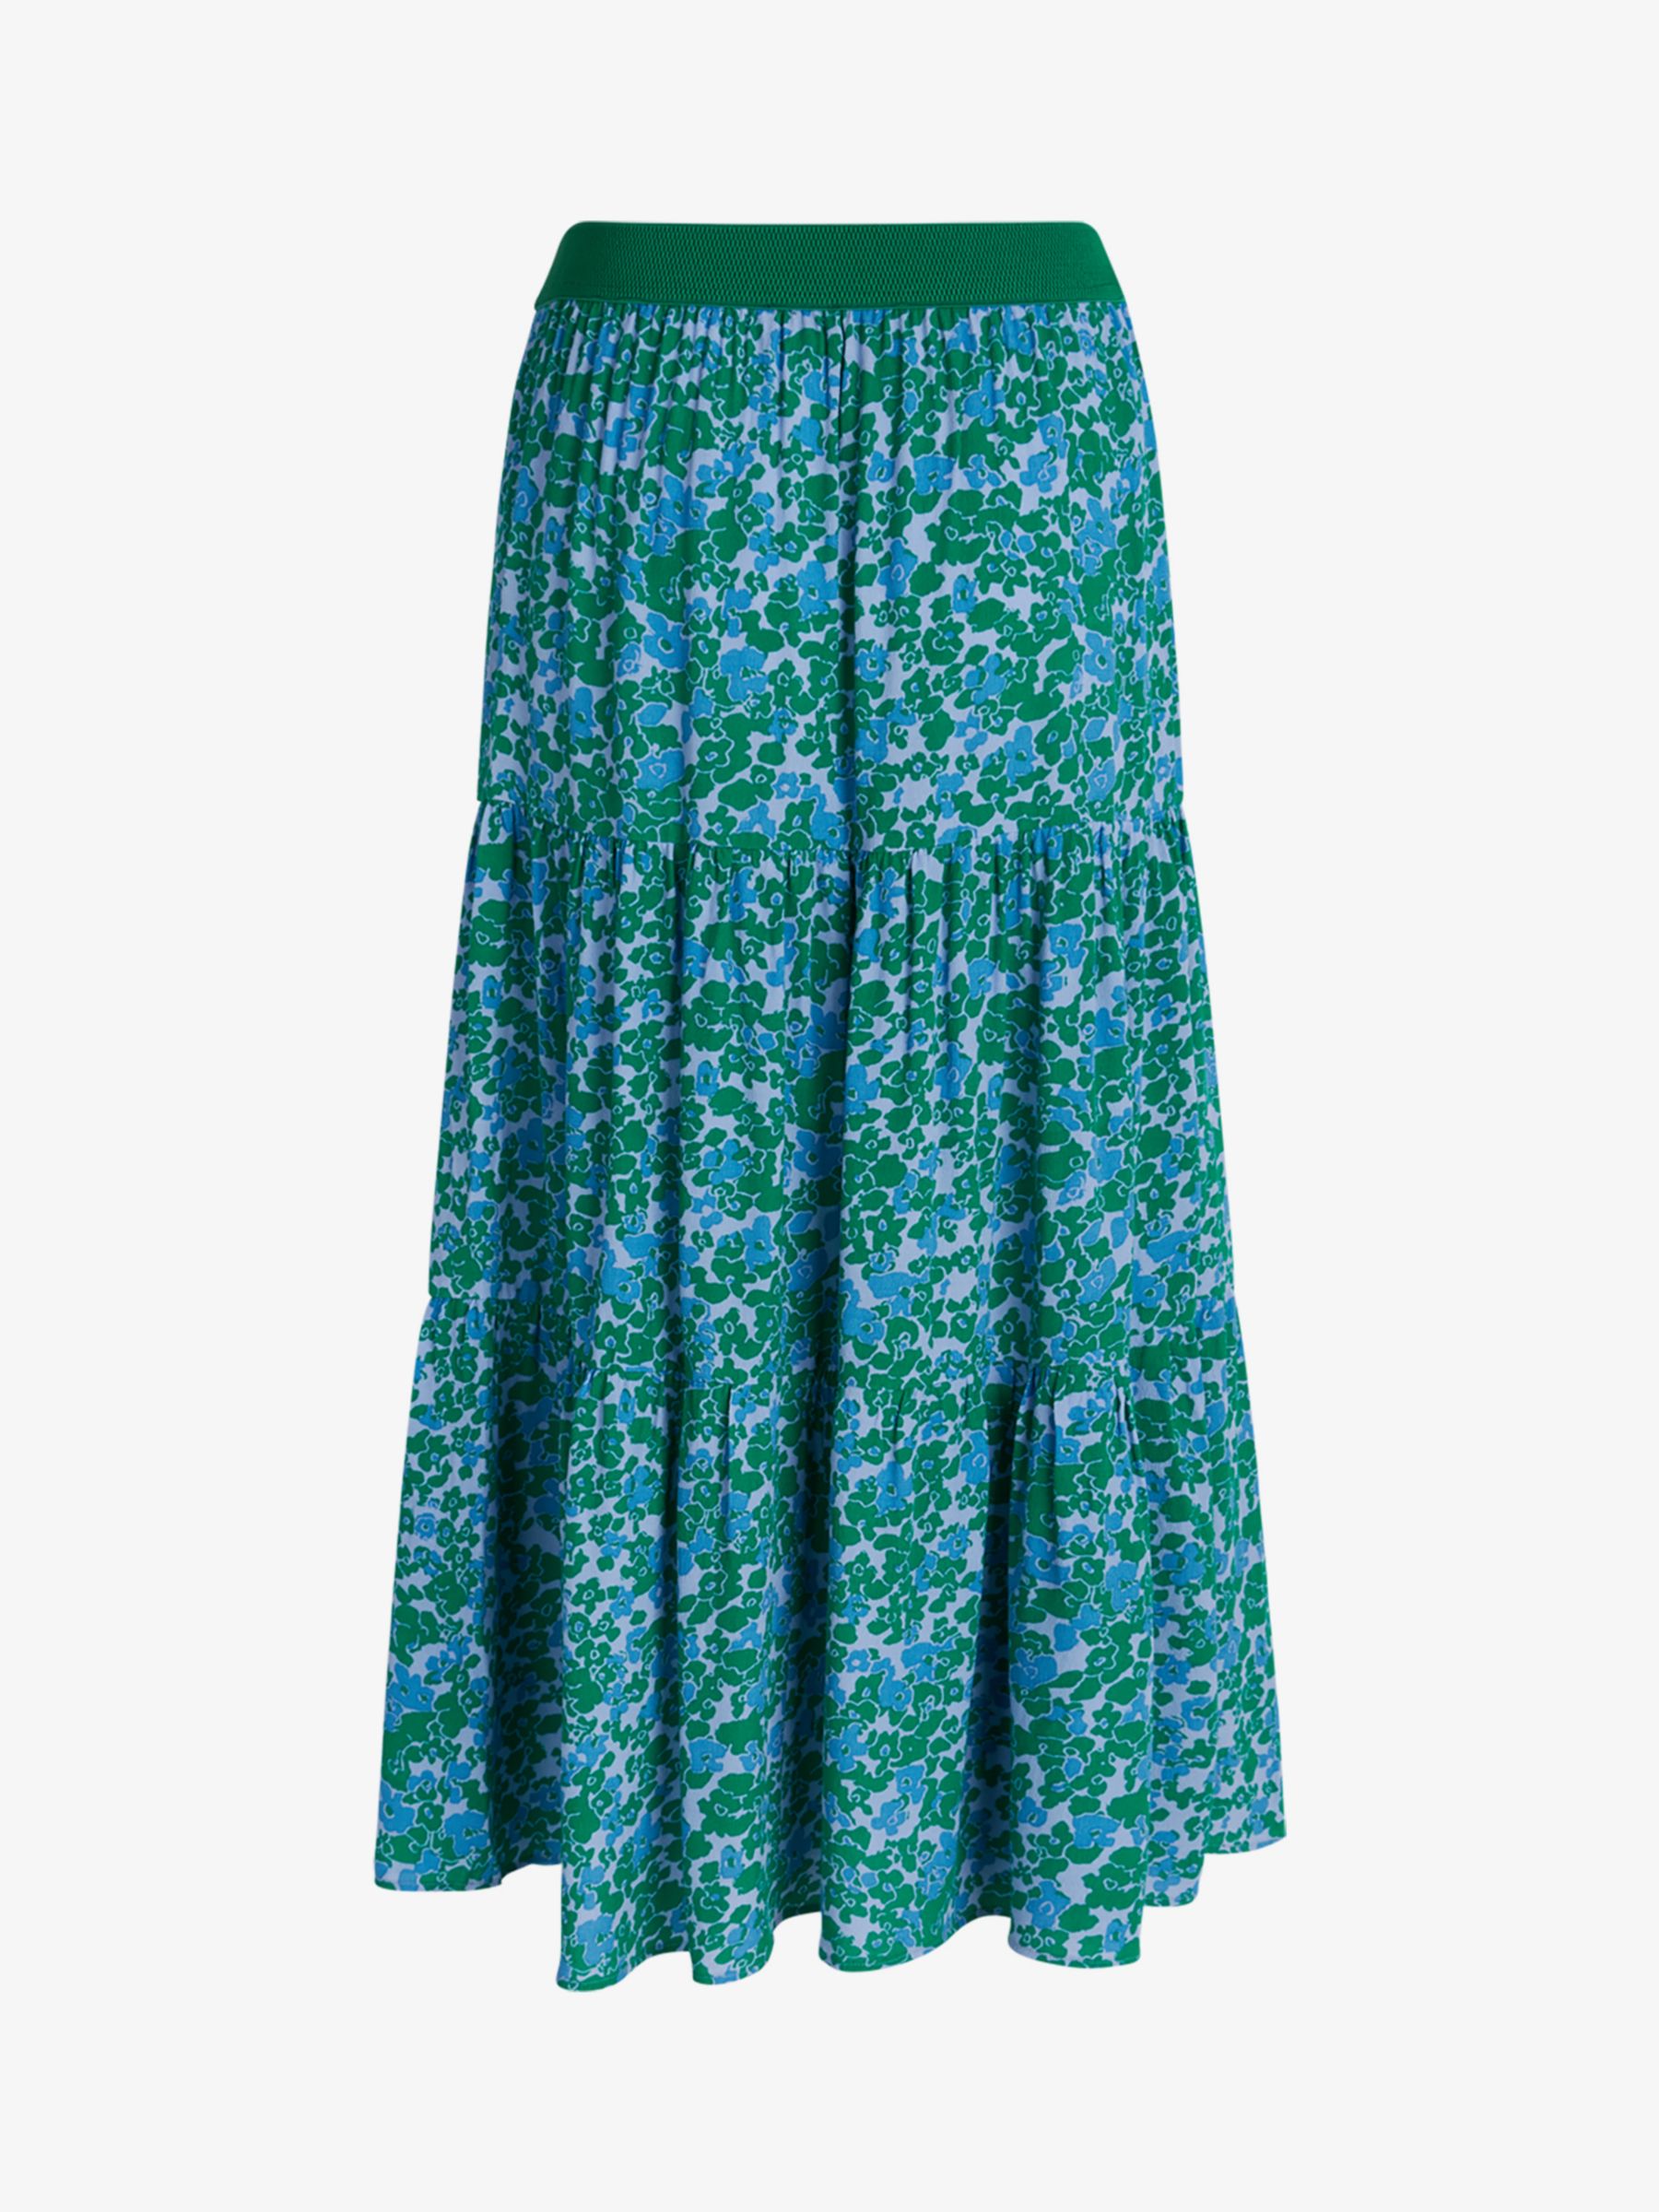 Noa Noa Bella Floral Tiered Skirt, Blue/Green at John Lewis & Partners